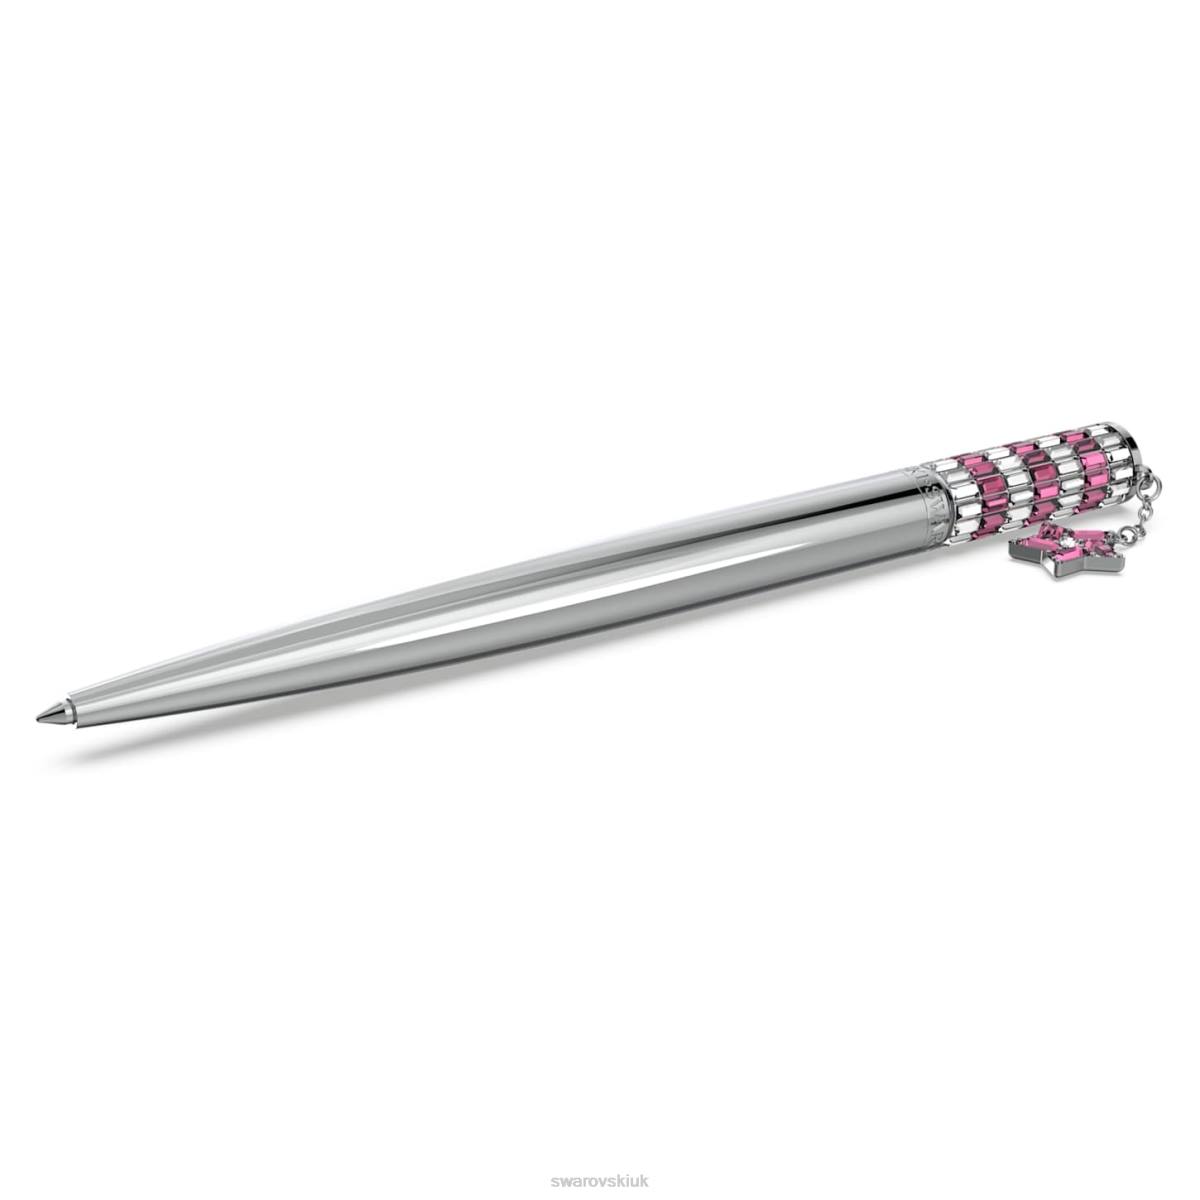 Accessories Swarovski Celebration 2023 ballpoint pen Star, Pink, Chrome plated 48JX1273